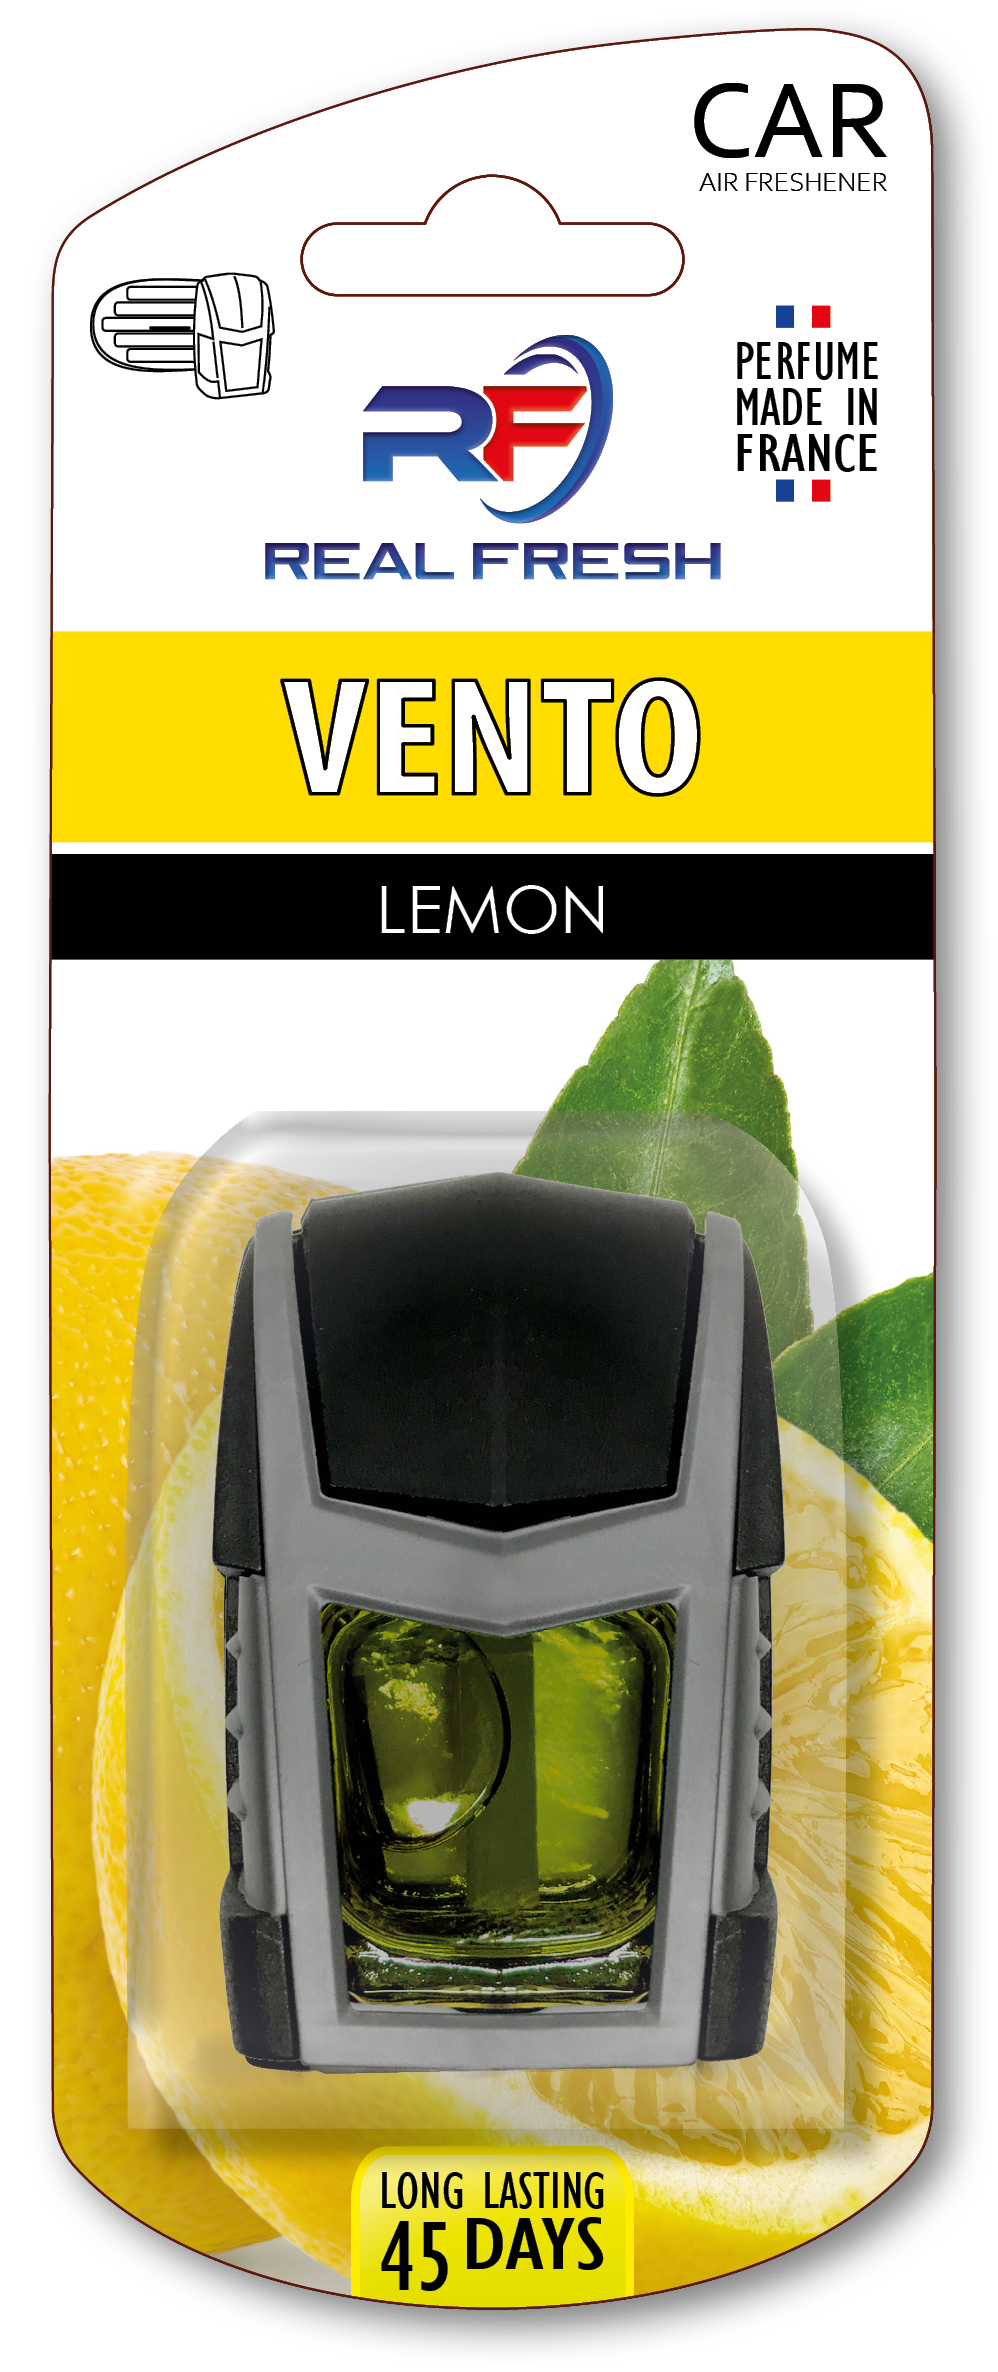 Vento Lemon Image